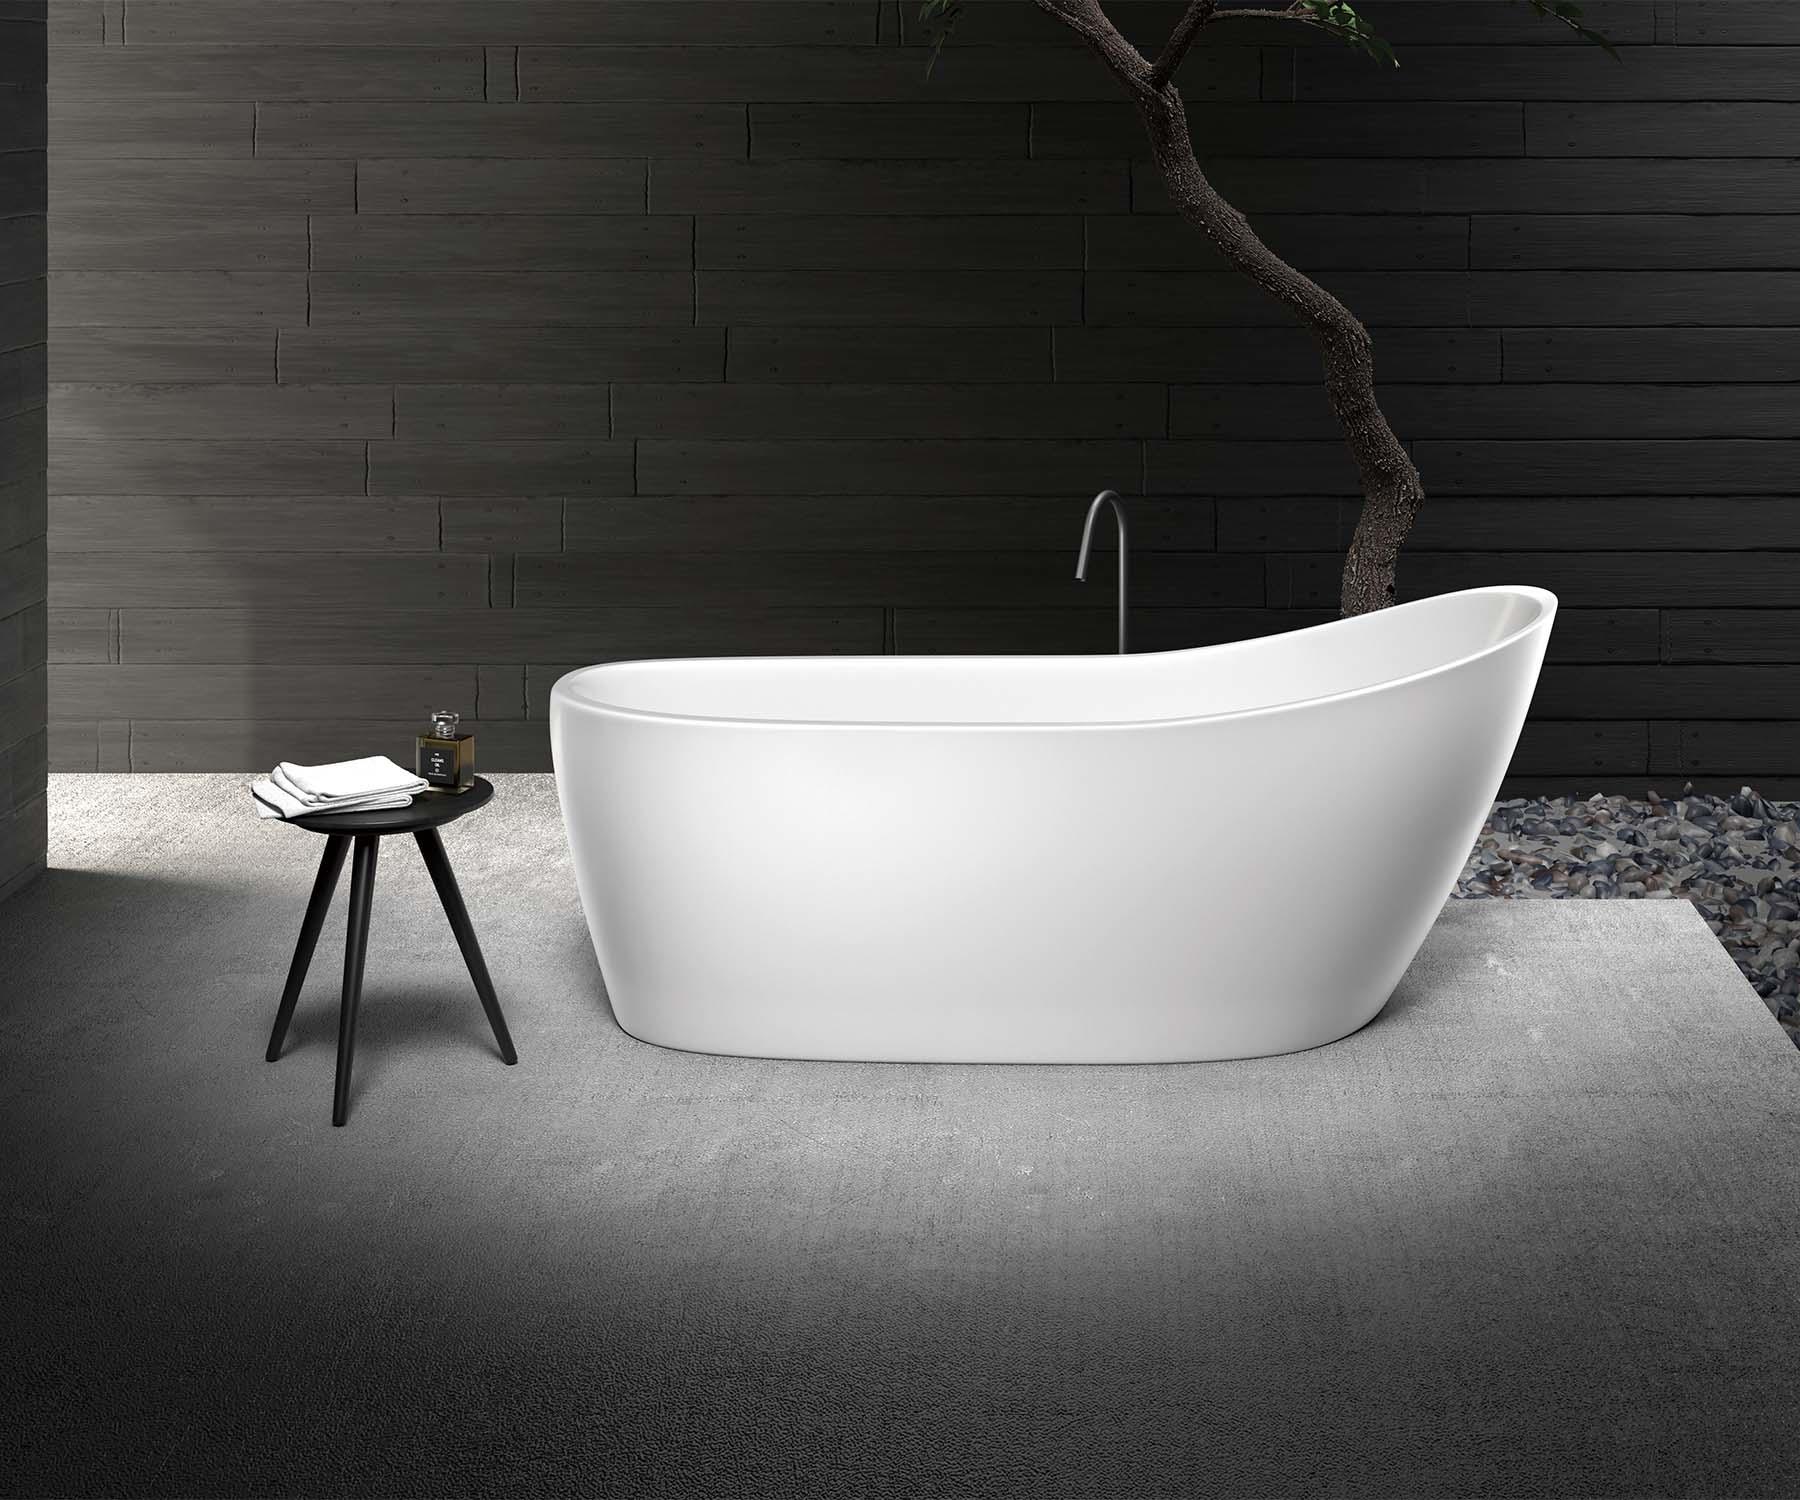 318 Small apartment thin edge arc adult freestanding acrylic bathtub